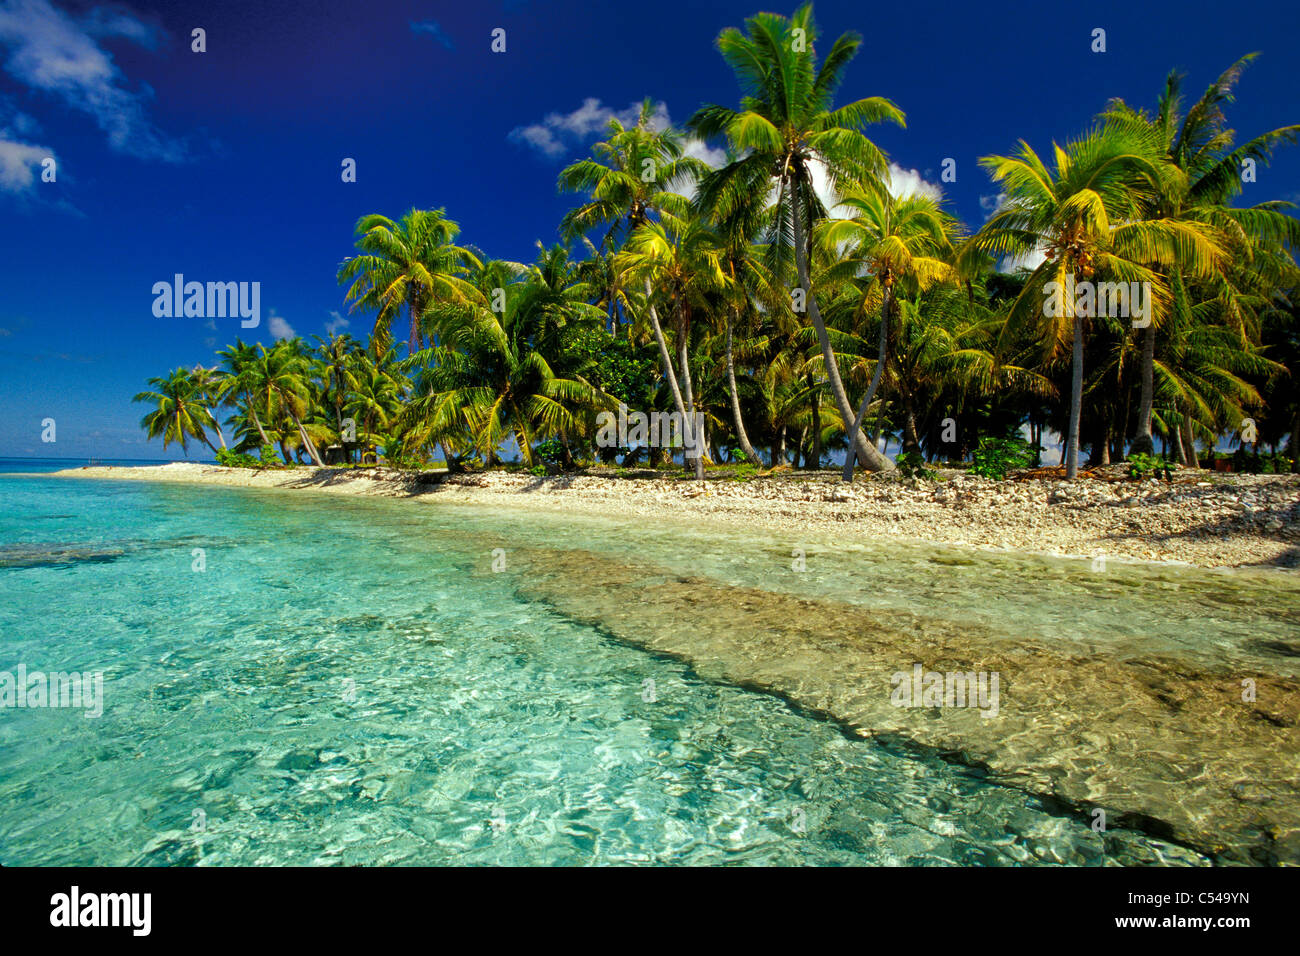 Tropical island with palm tree-lined beach, Blue lagoon, Rangiroa ...